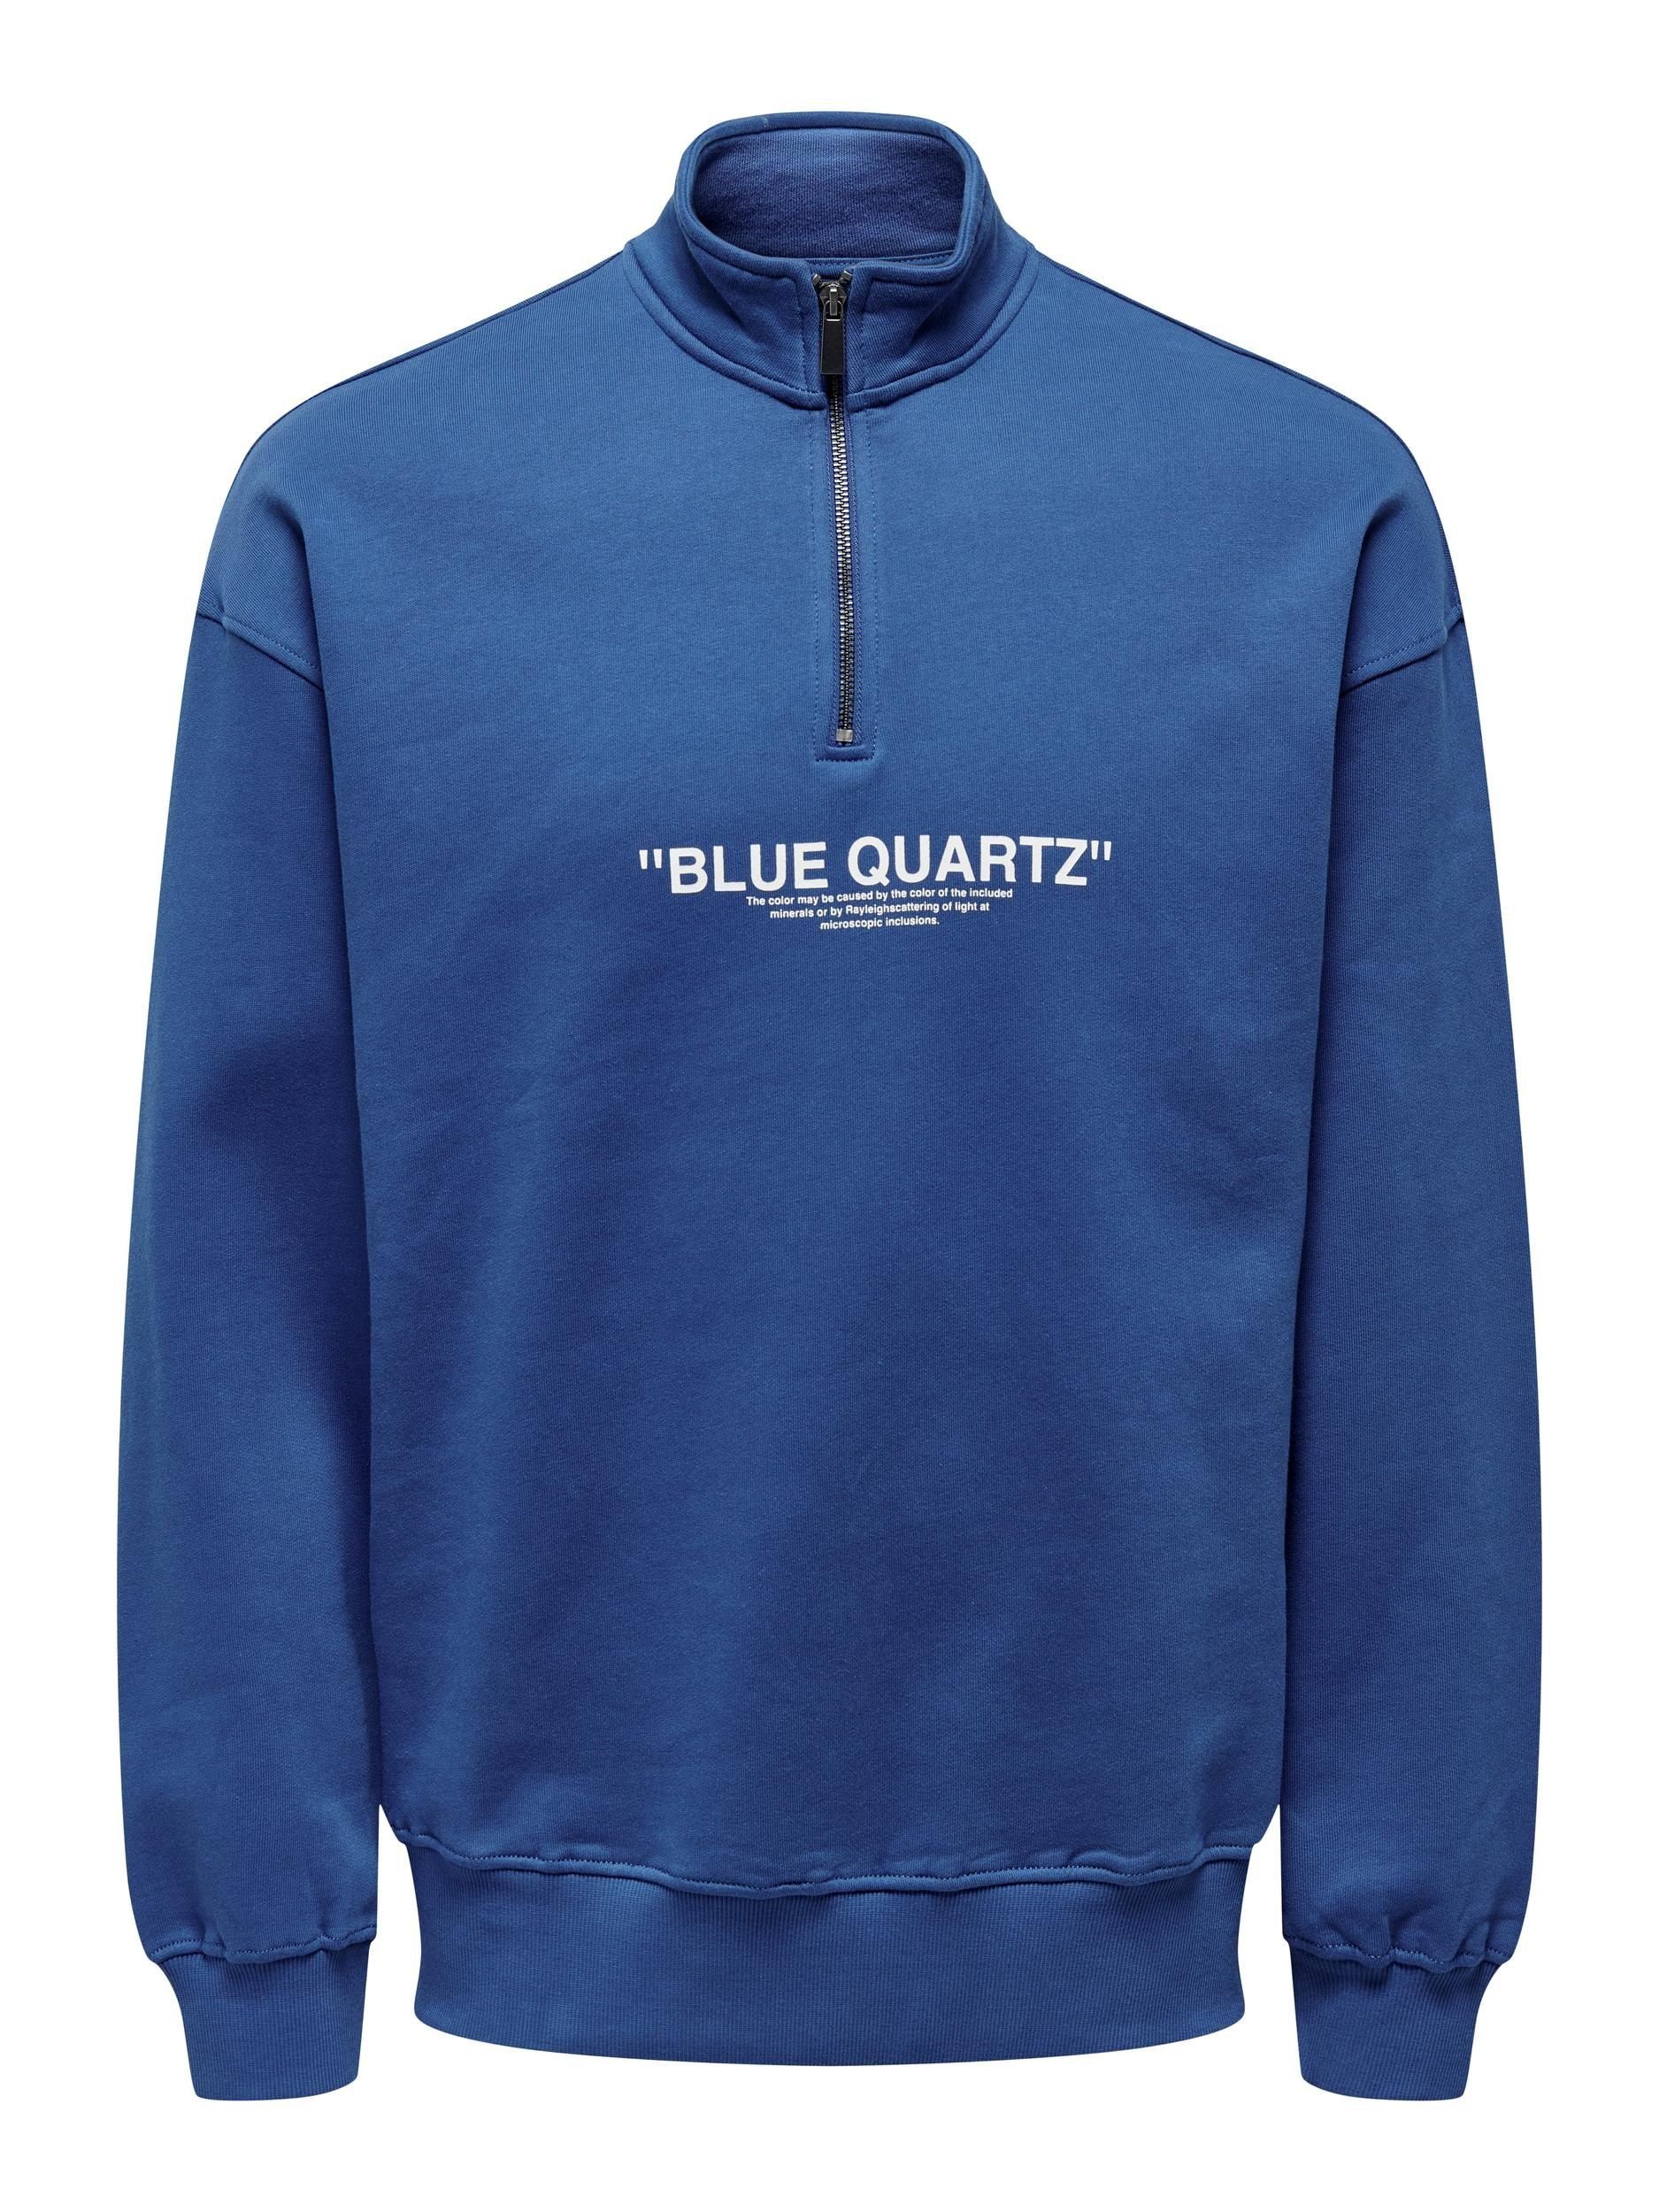 ONLY & SONS Sweatshirt 239353 Blue Quartz | Sweatshirts